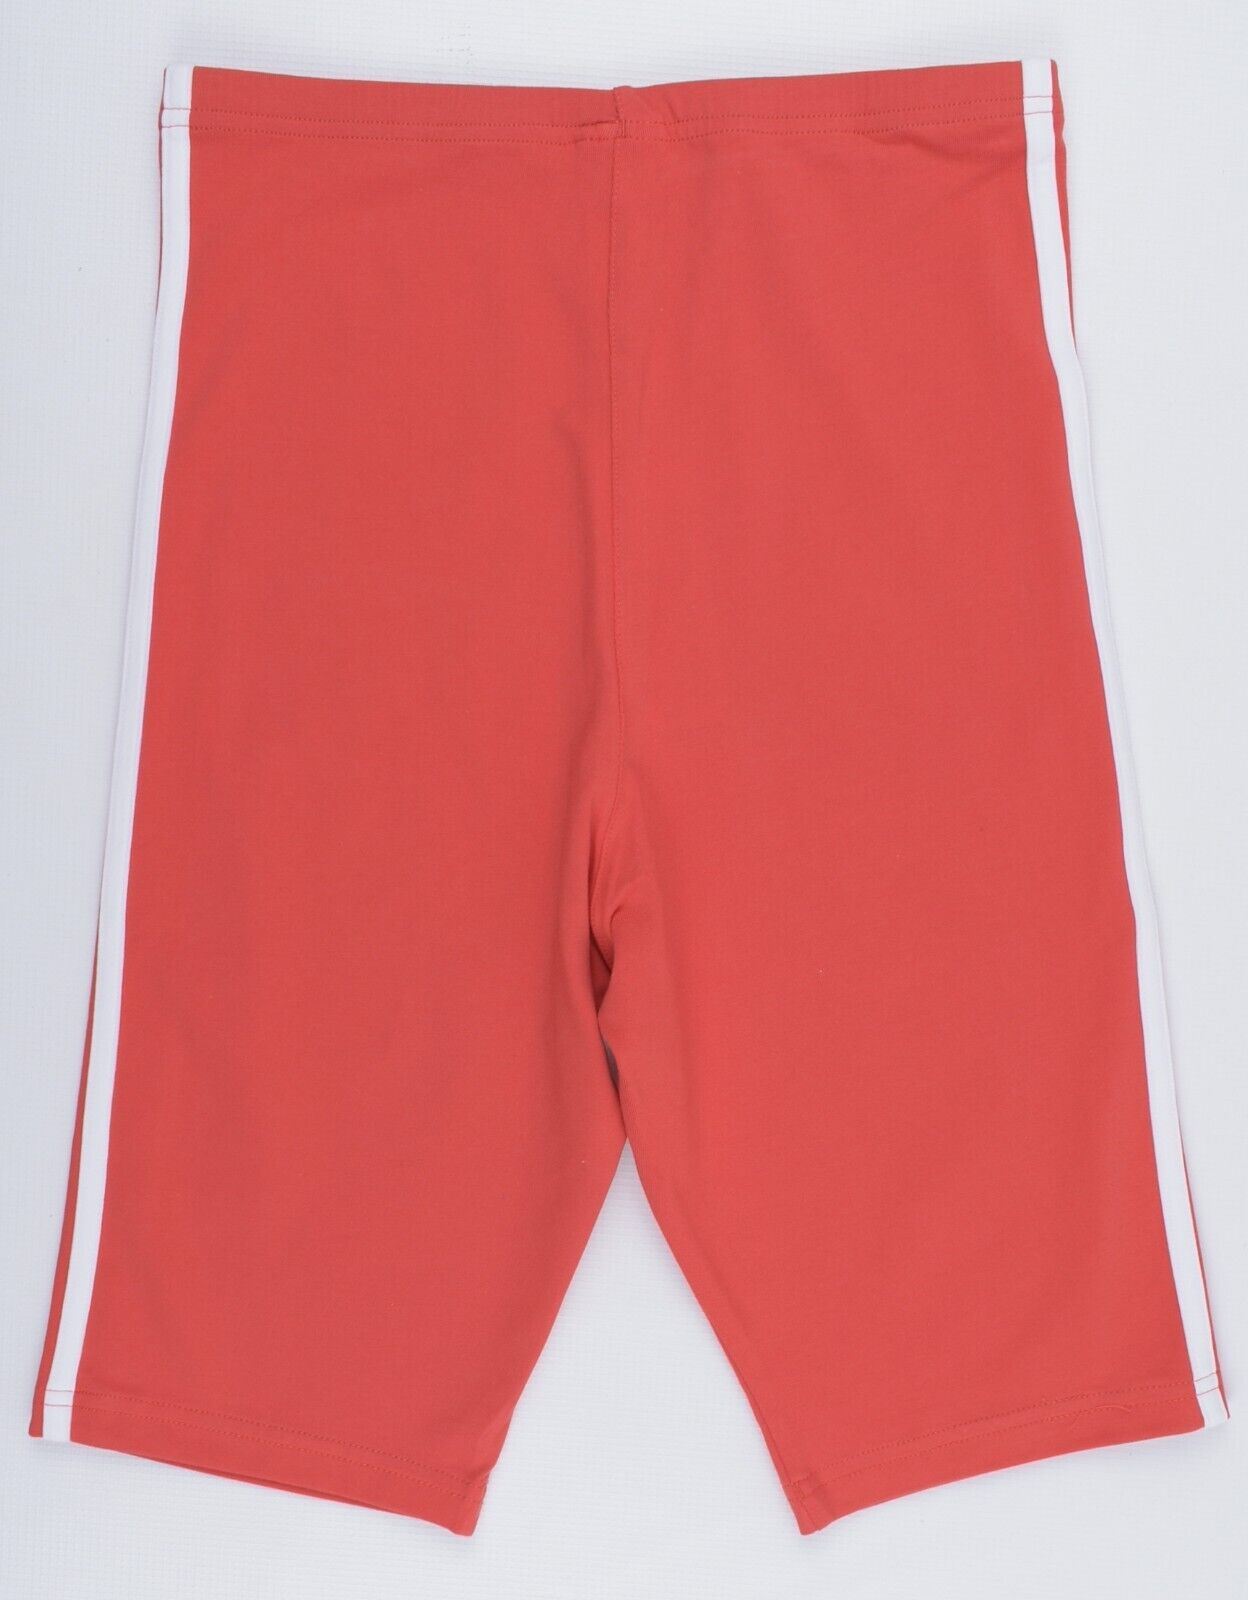 ADIDAS Women's 3 Stripes Essential Short Leggings Shorts, Red, size M (UK 12-14)